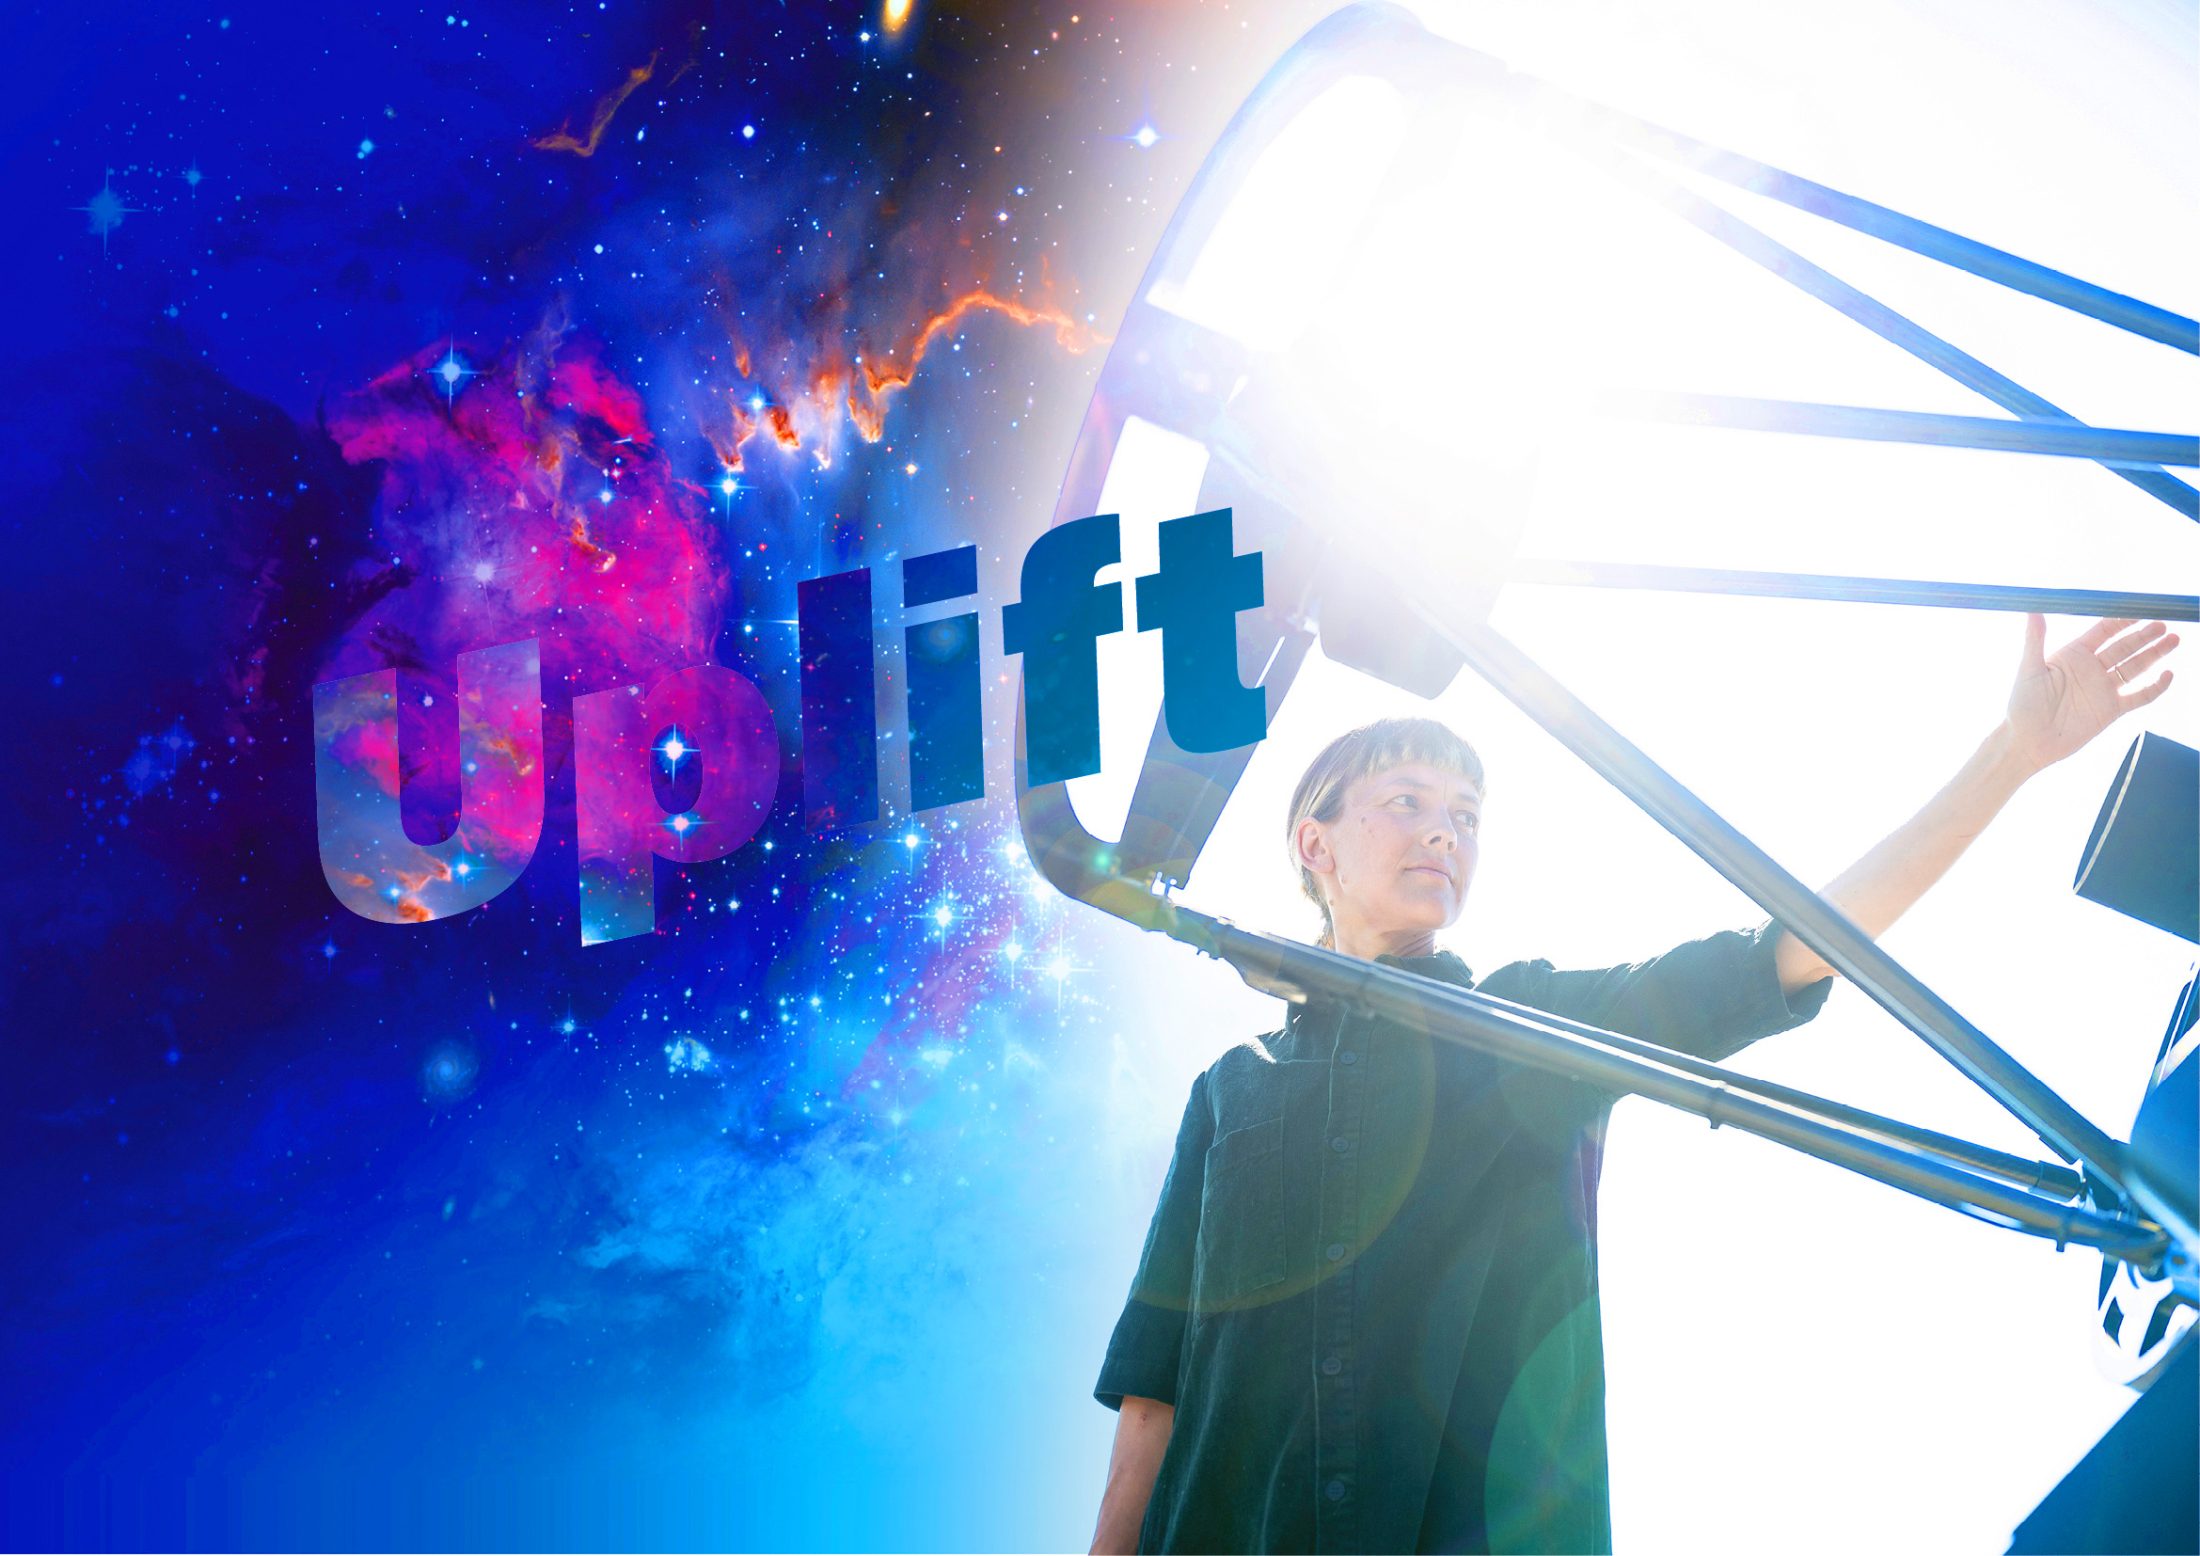 ETH Zurich Foundation, Uplift: Origin of life